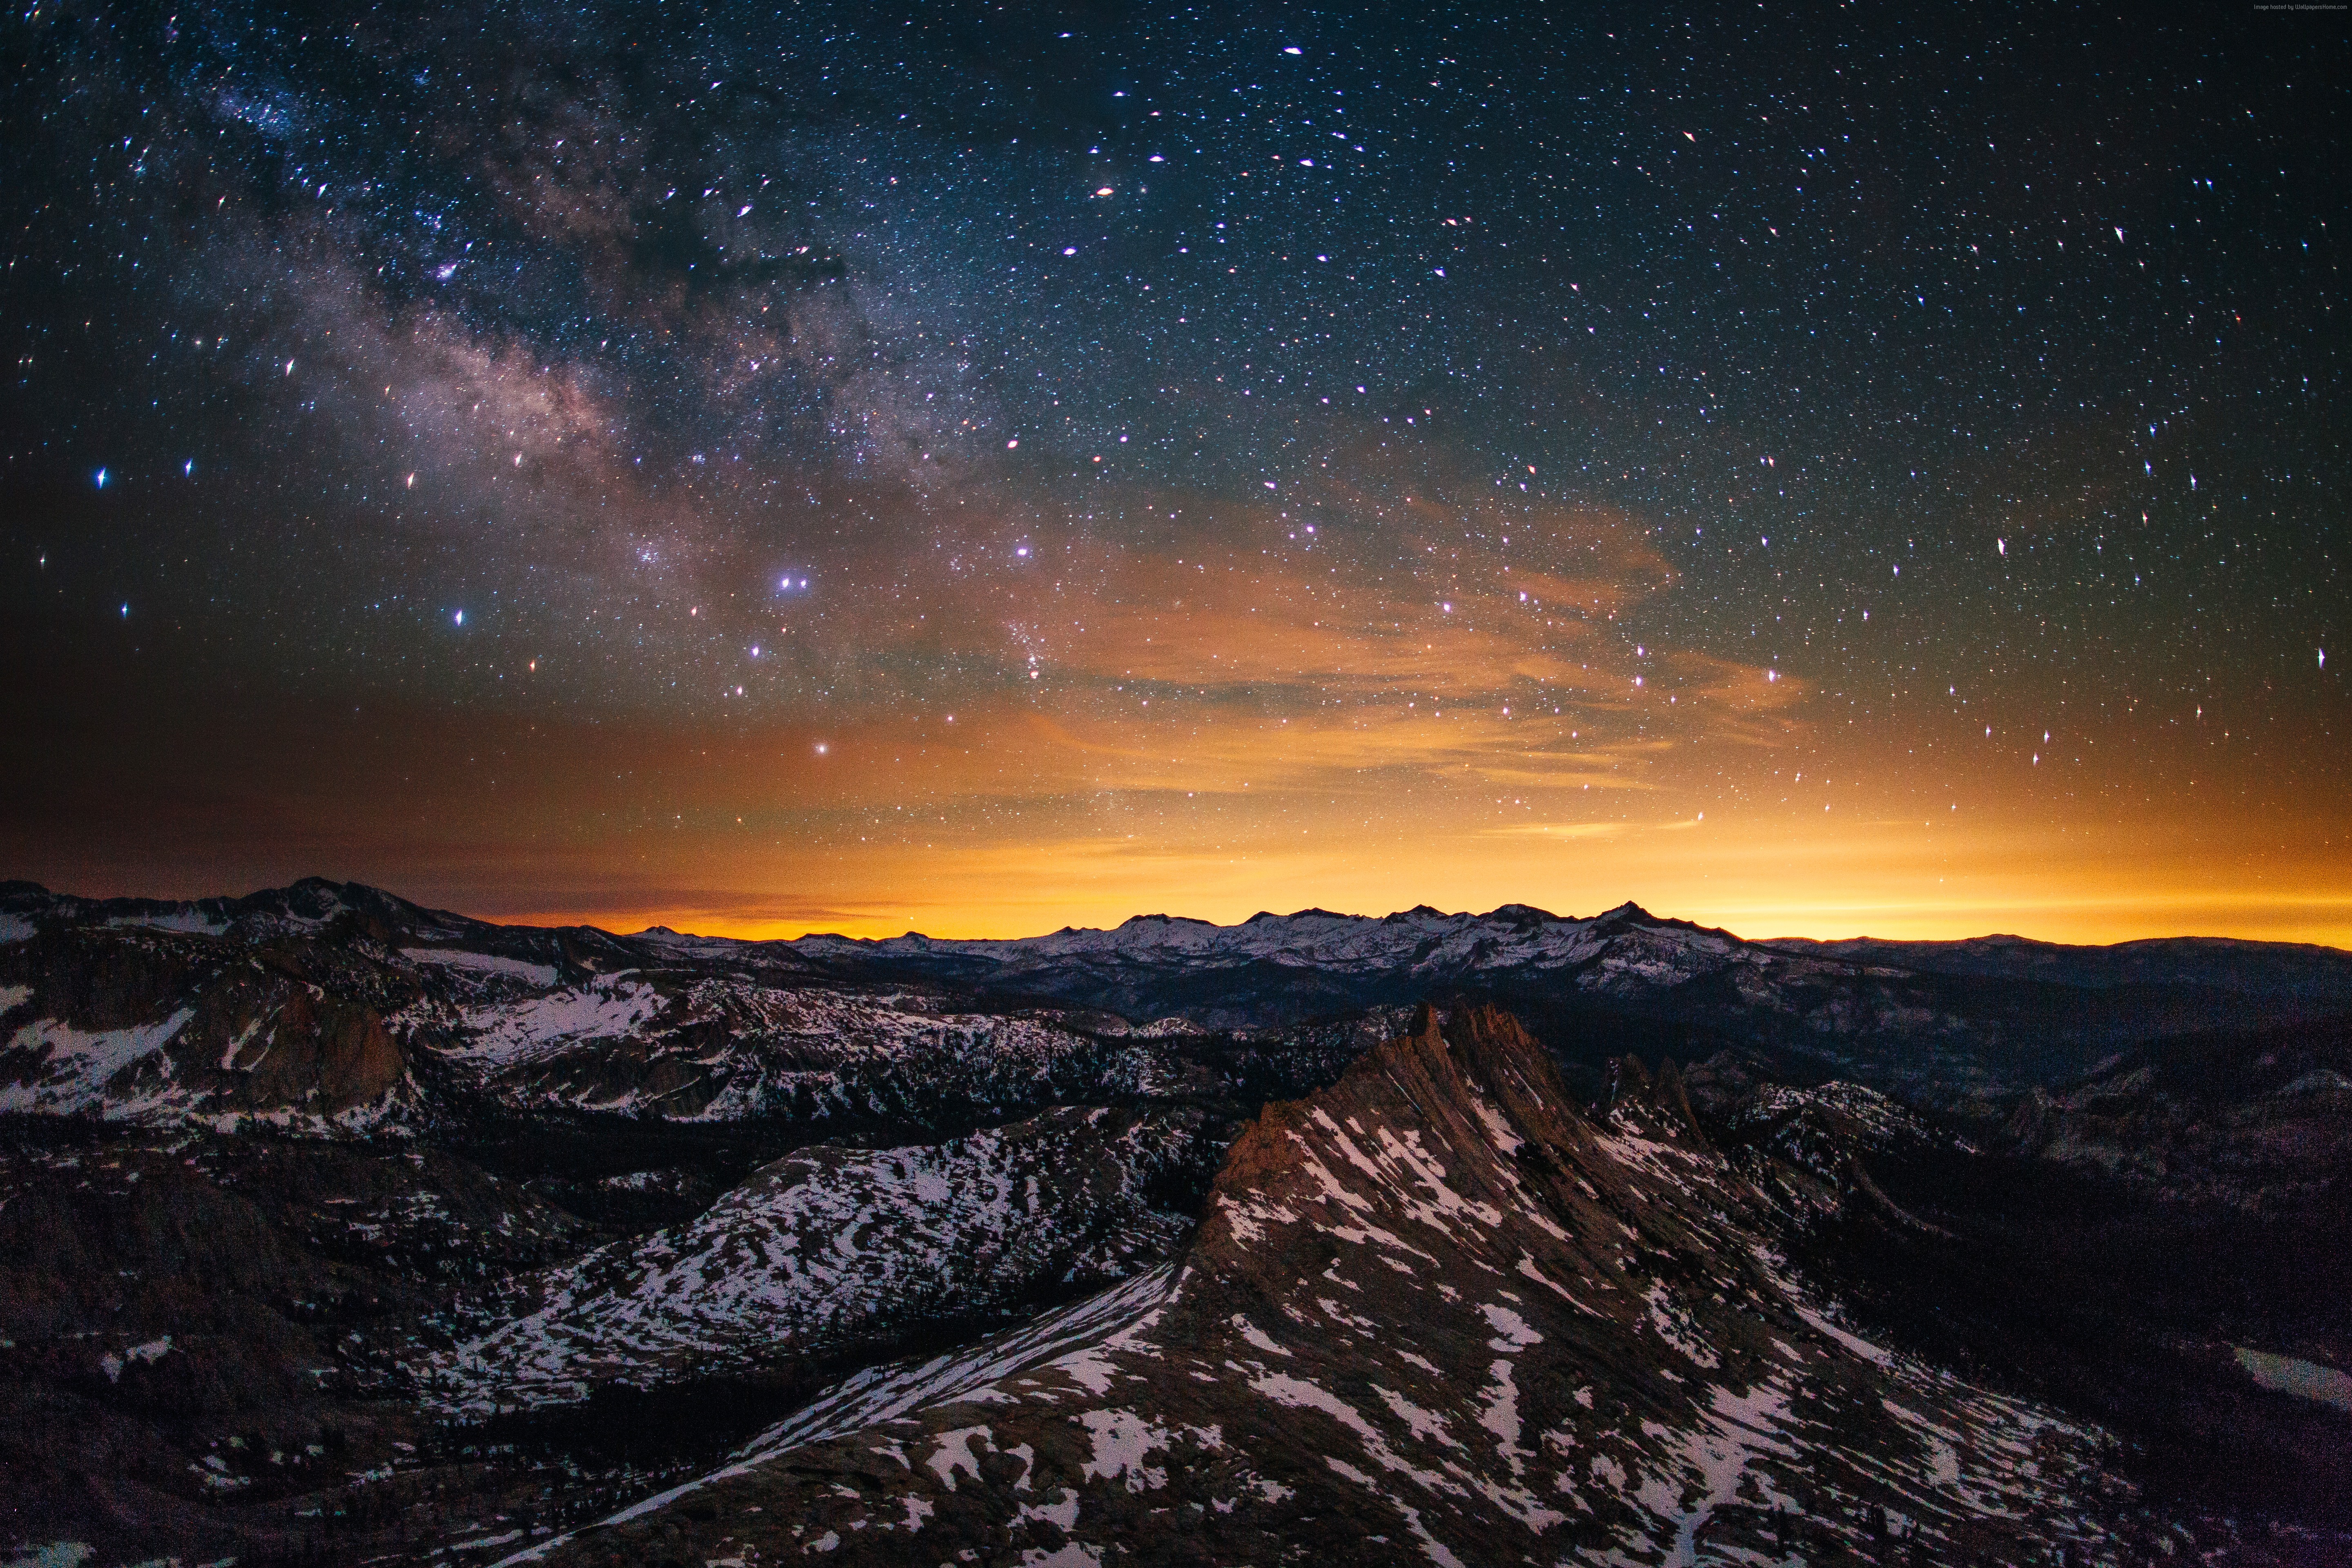  Yosemite 5k wallpapers forest stars sunset OSX apple mountains